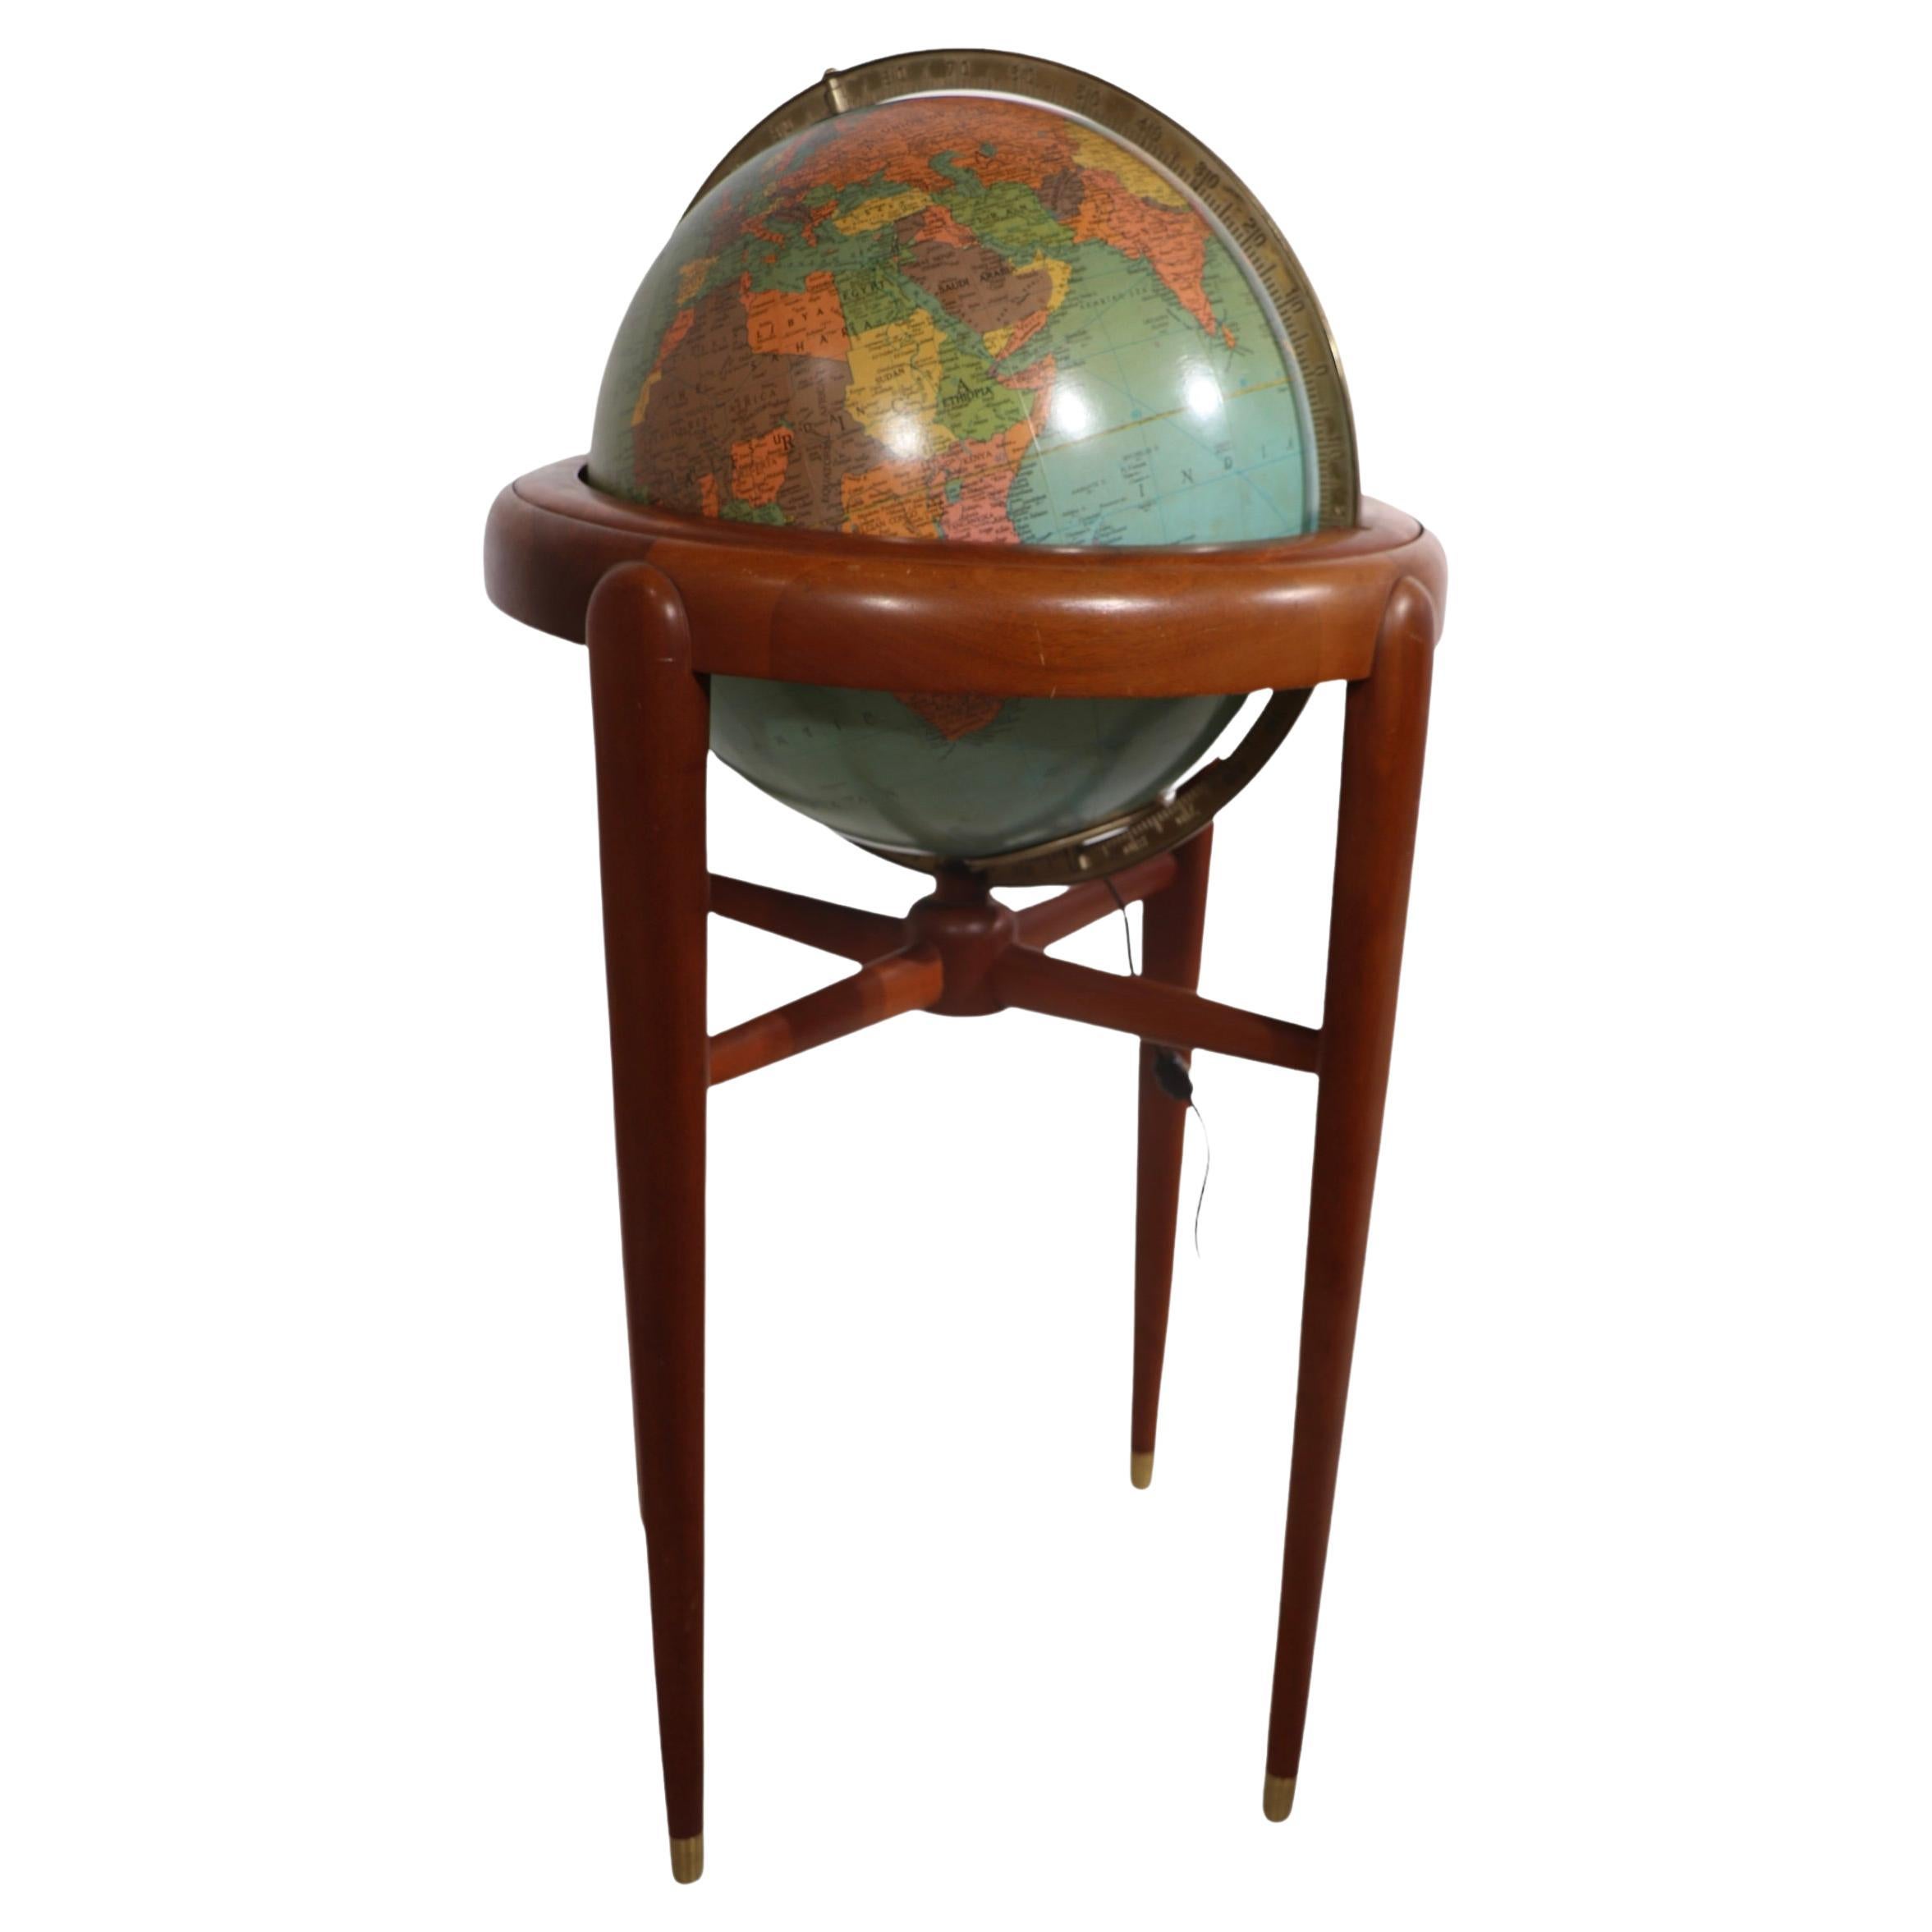 Standmodell „Light Up Globe“ von Replogle, ca. 1950/1960er Jahre